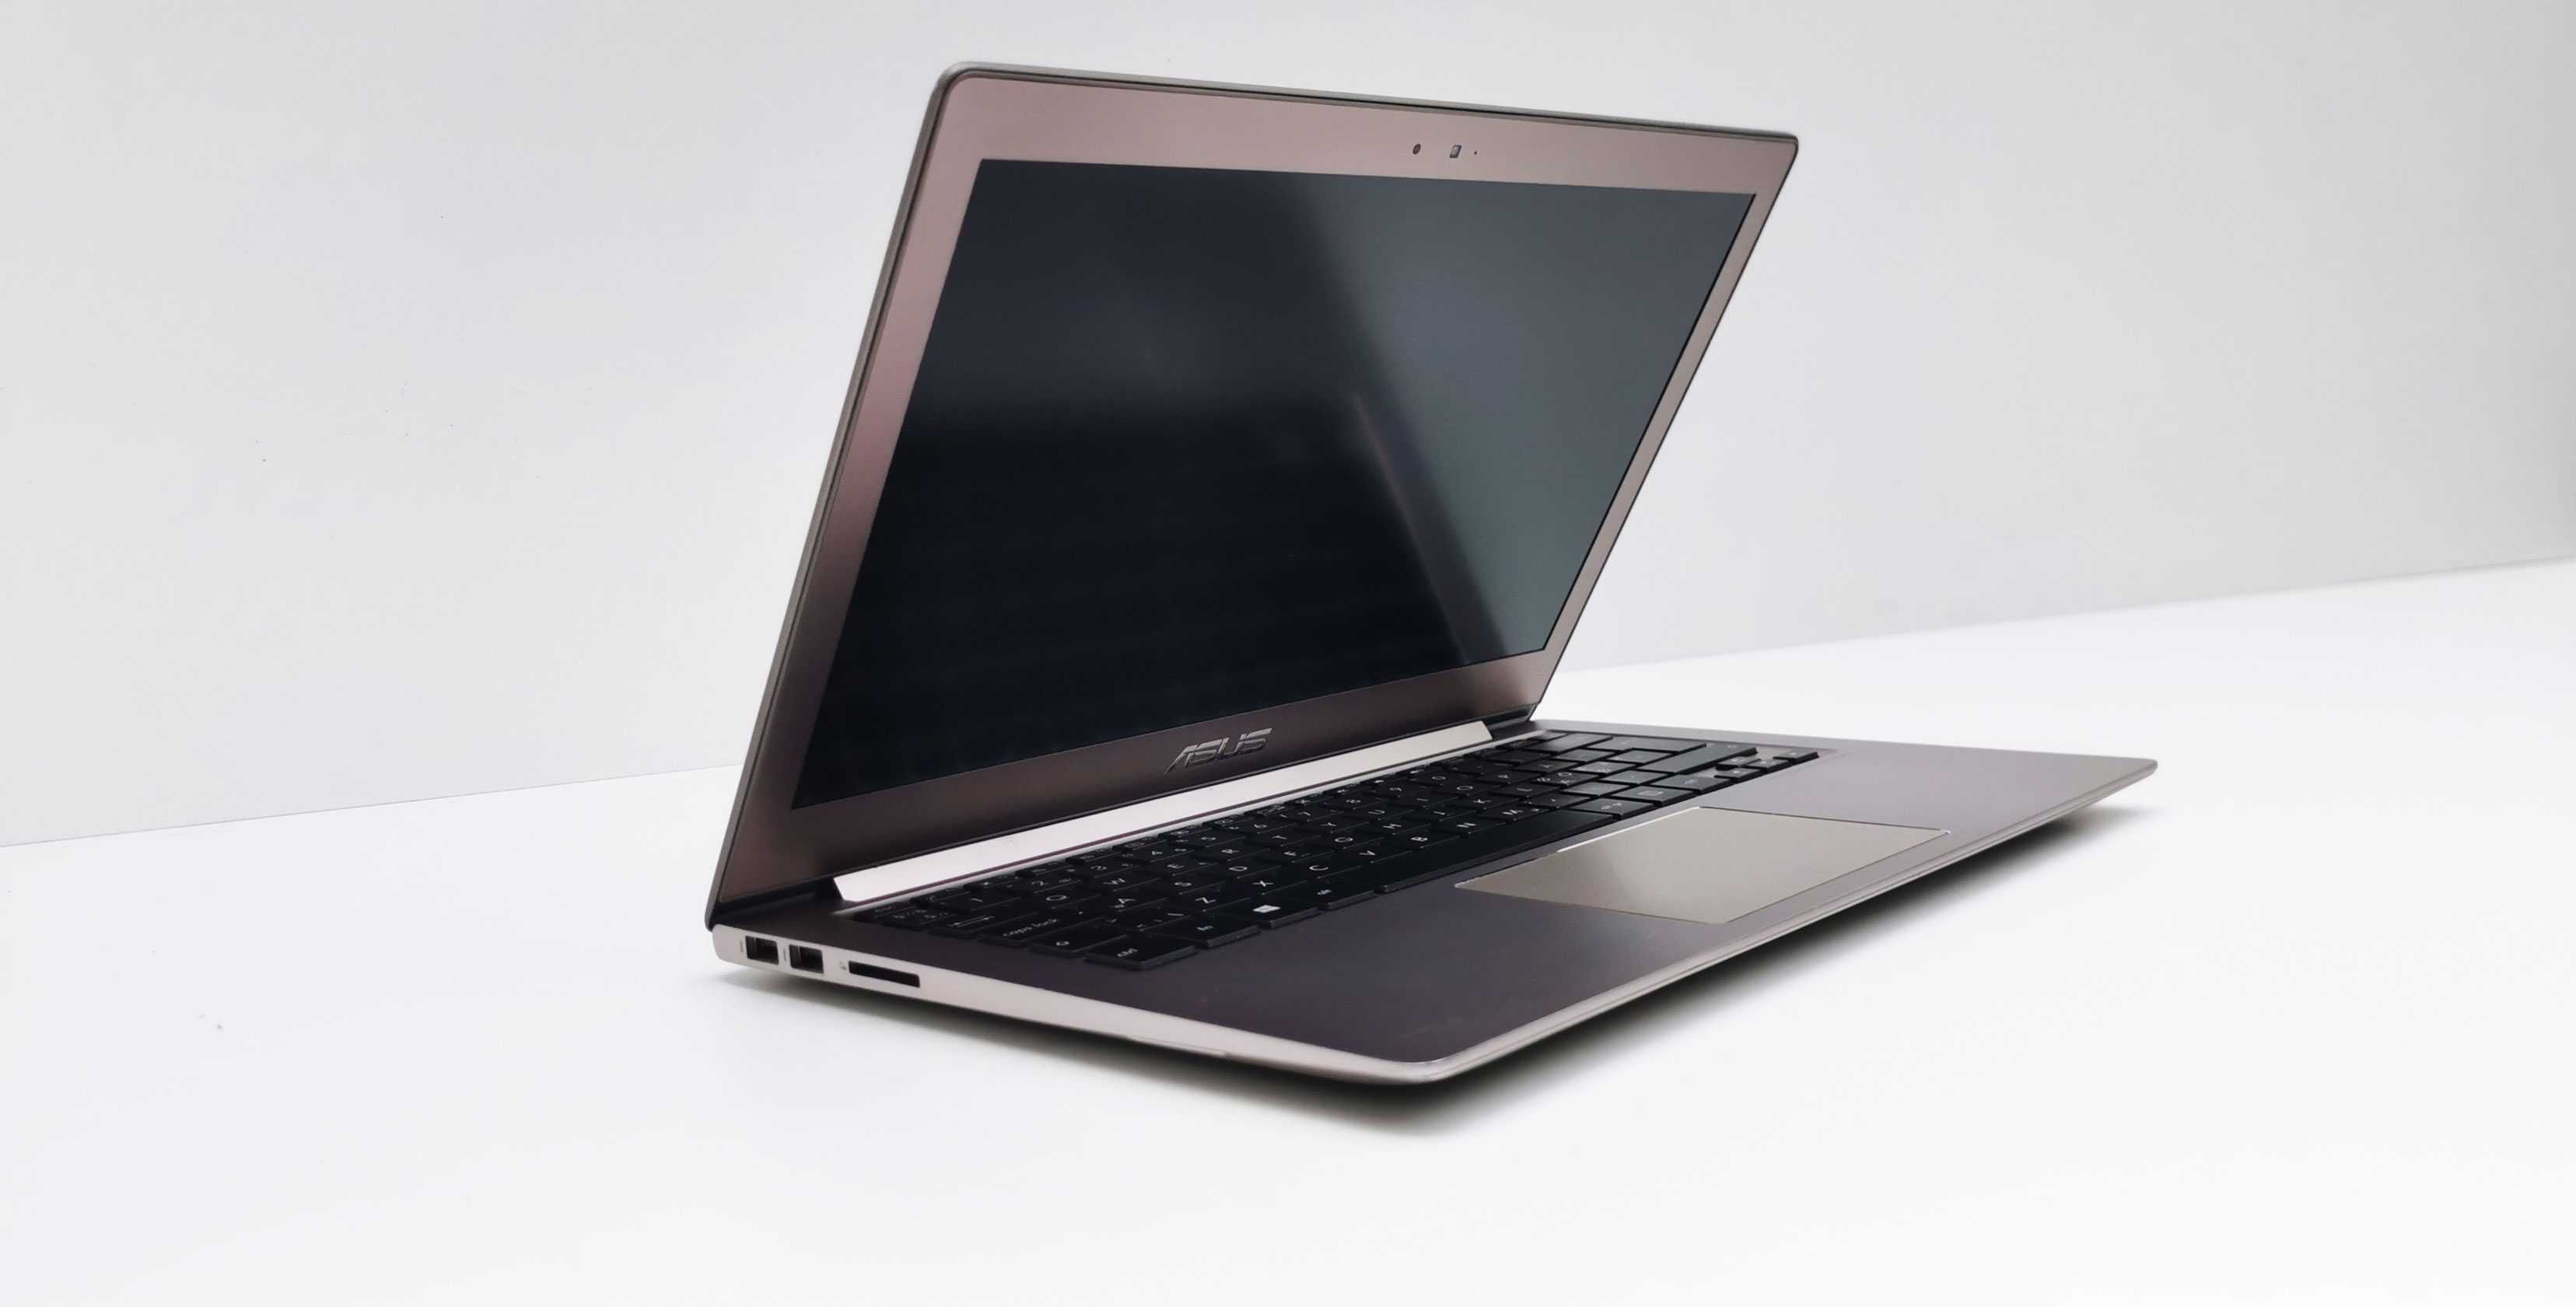 Asus VivoBook 13.3" i7 5500U nVidia GeForce - configurabil la cerere